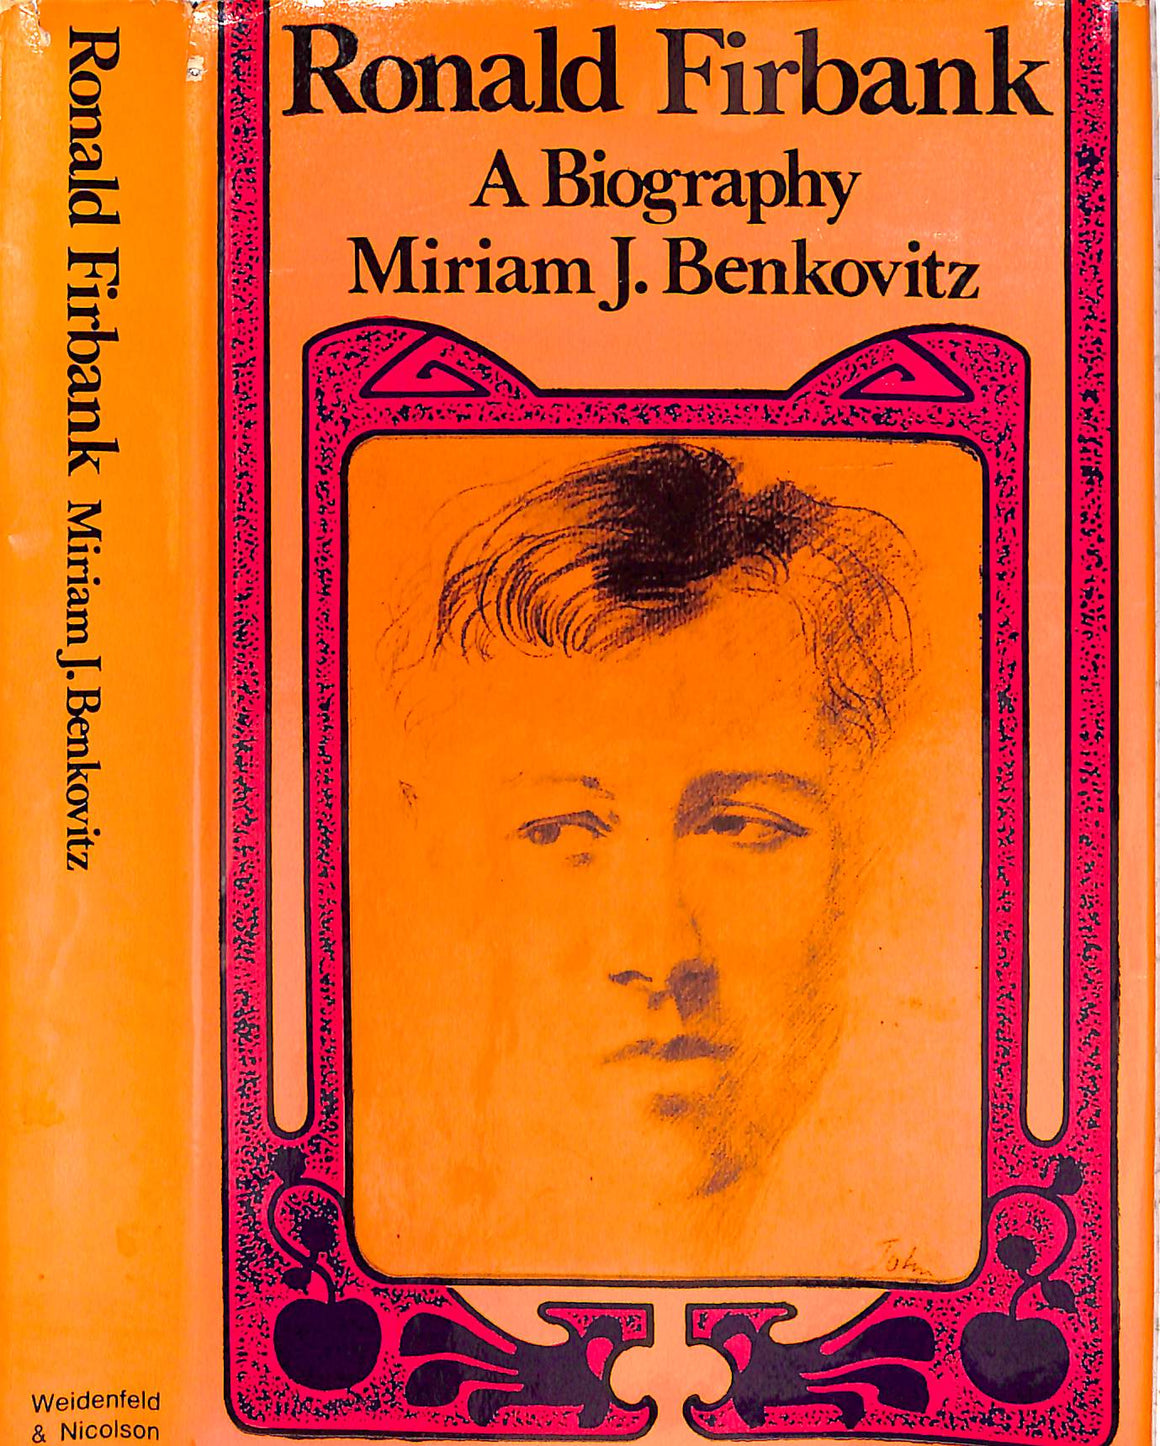 "Ronald Firbank: A Biography" 1970 BENKOVITZ, Miriam J.